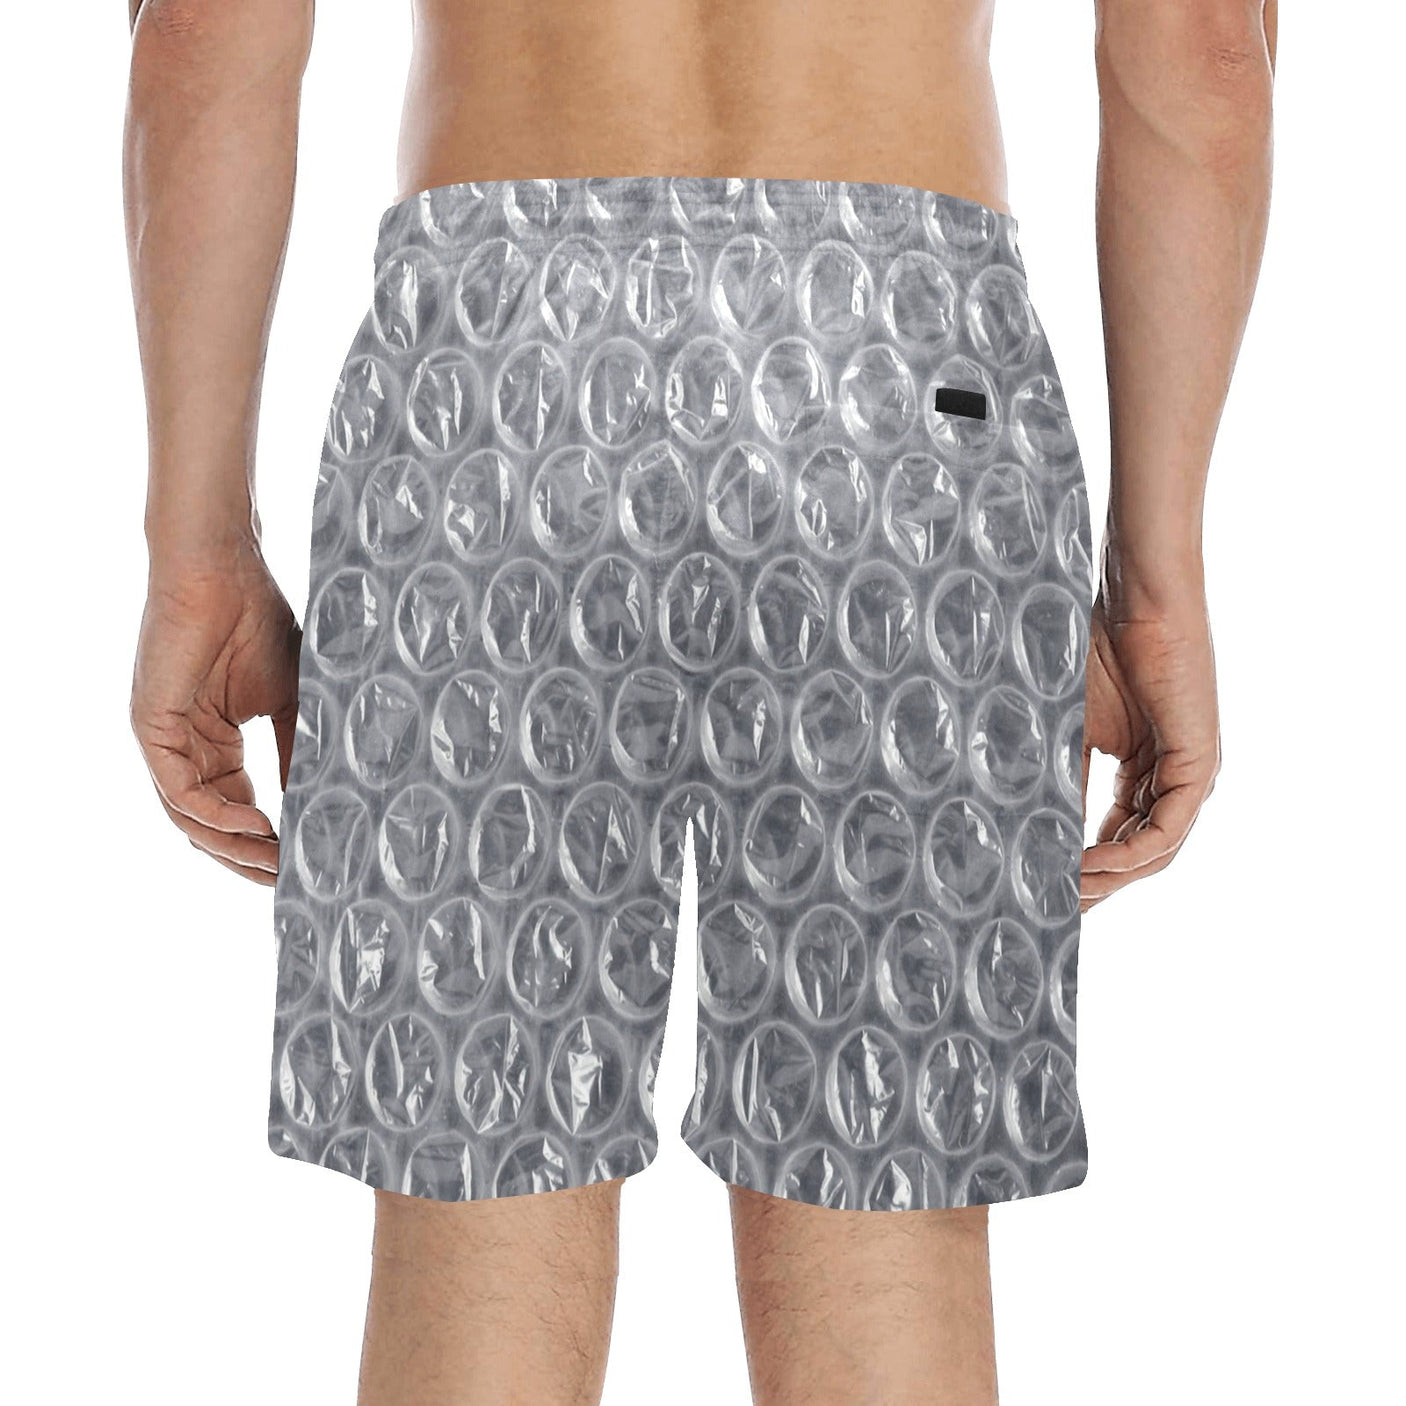 Bubble Wrap Swim Trunks | Men's Swimming Beach Shorts - Random Galaxy